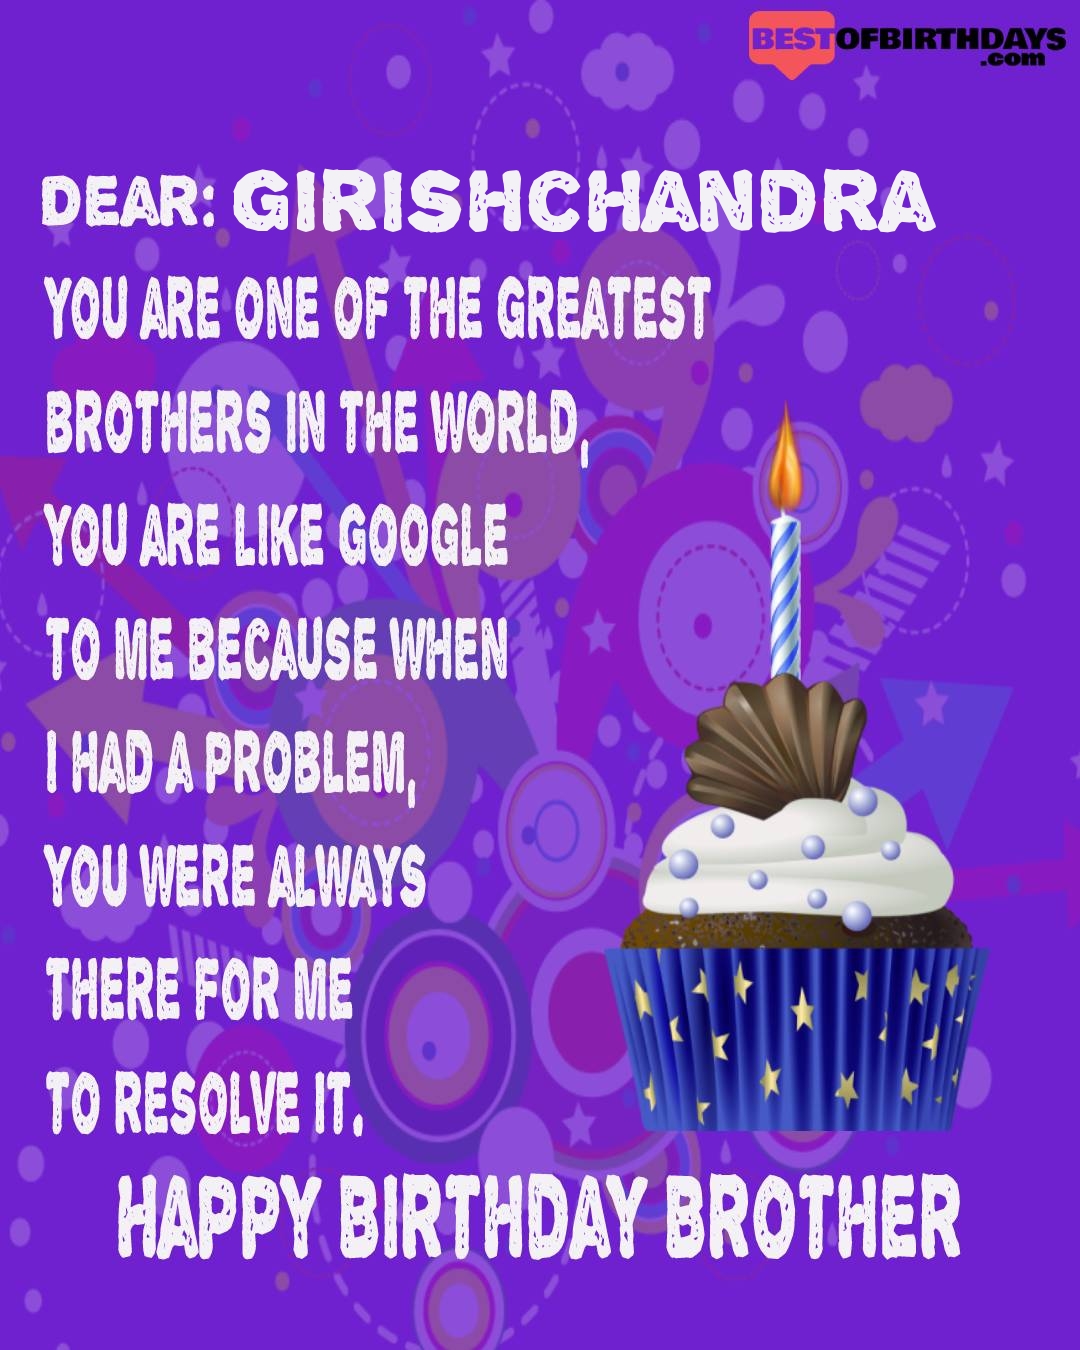 Happy birthday girishchandra bhai brother bro